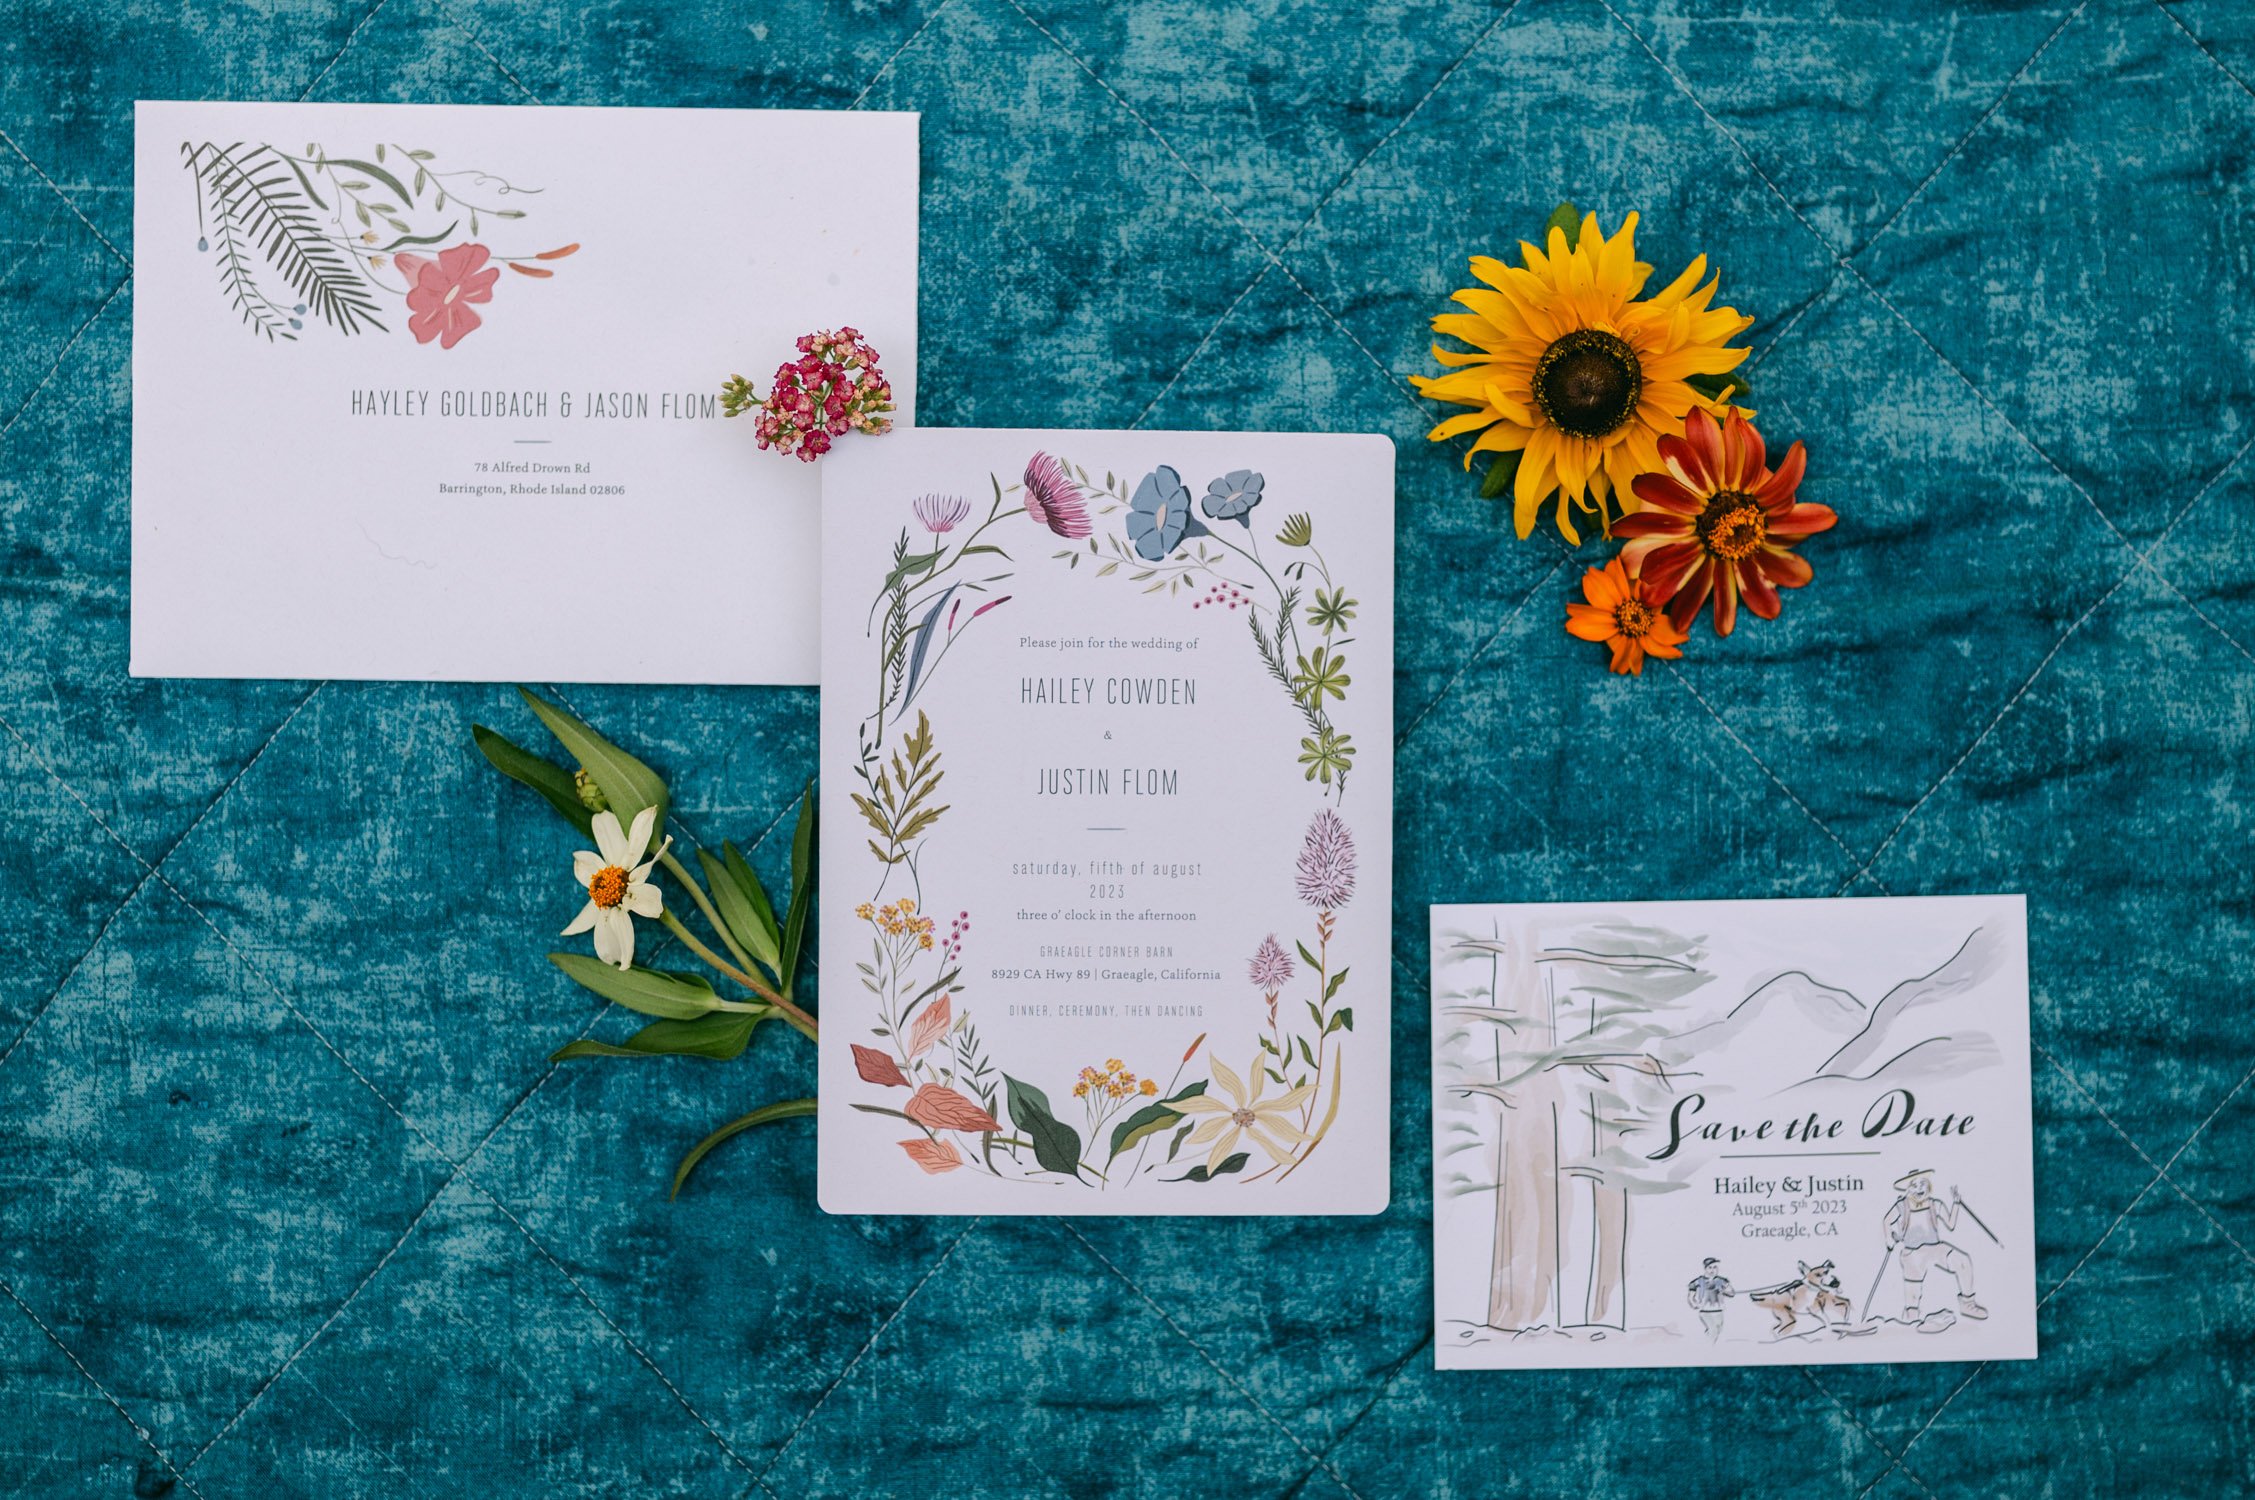 graeagle corner barn wedding, photo of the wedding invitations